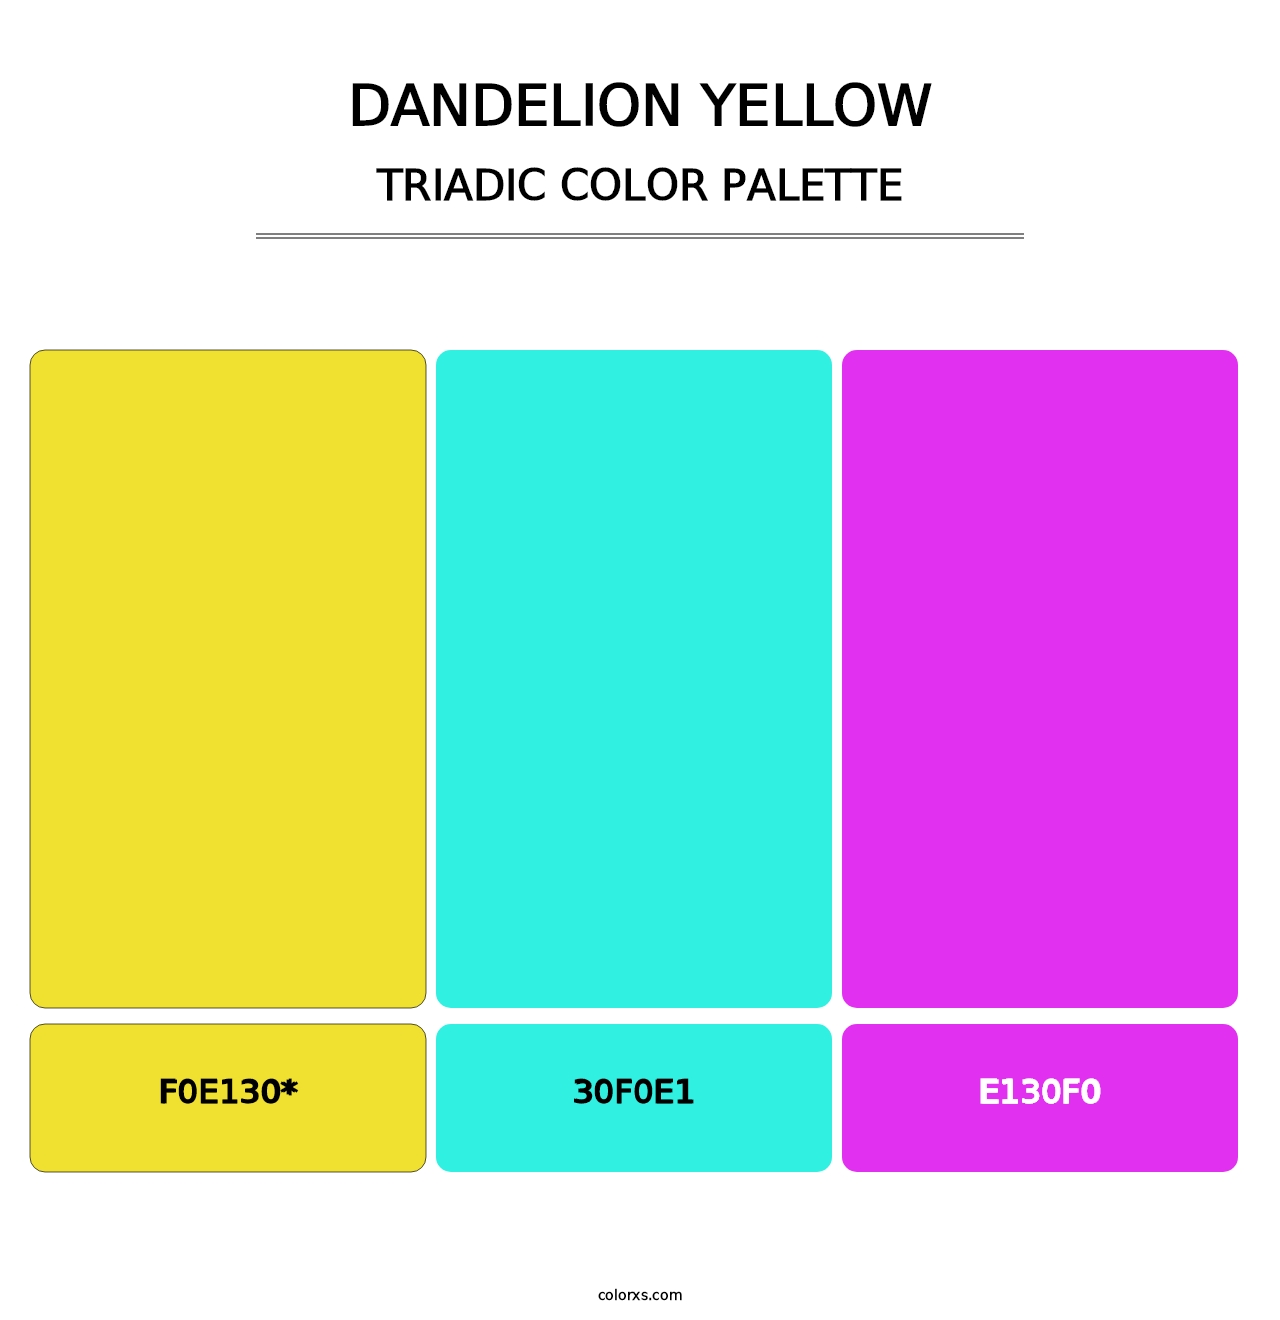 Dandelion Yellow - Triadic Color Palette